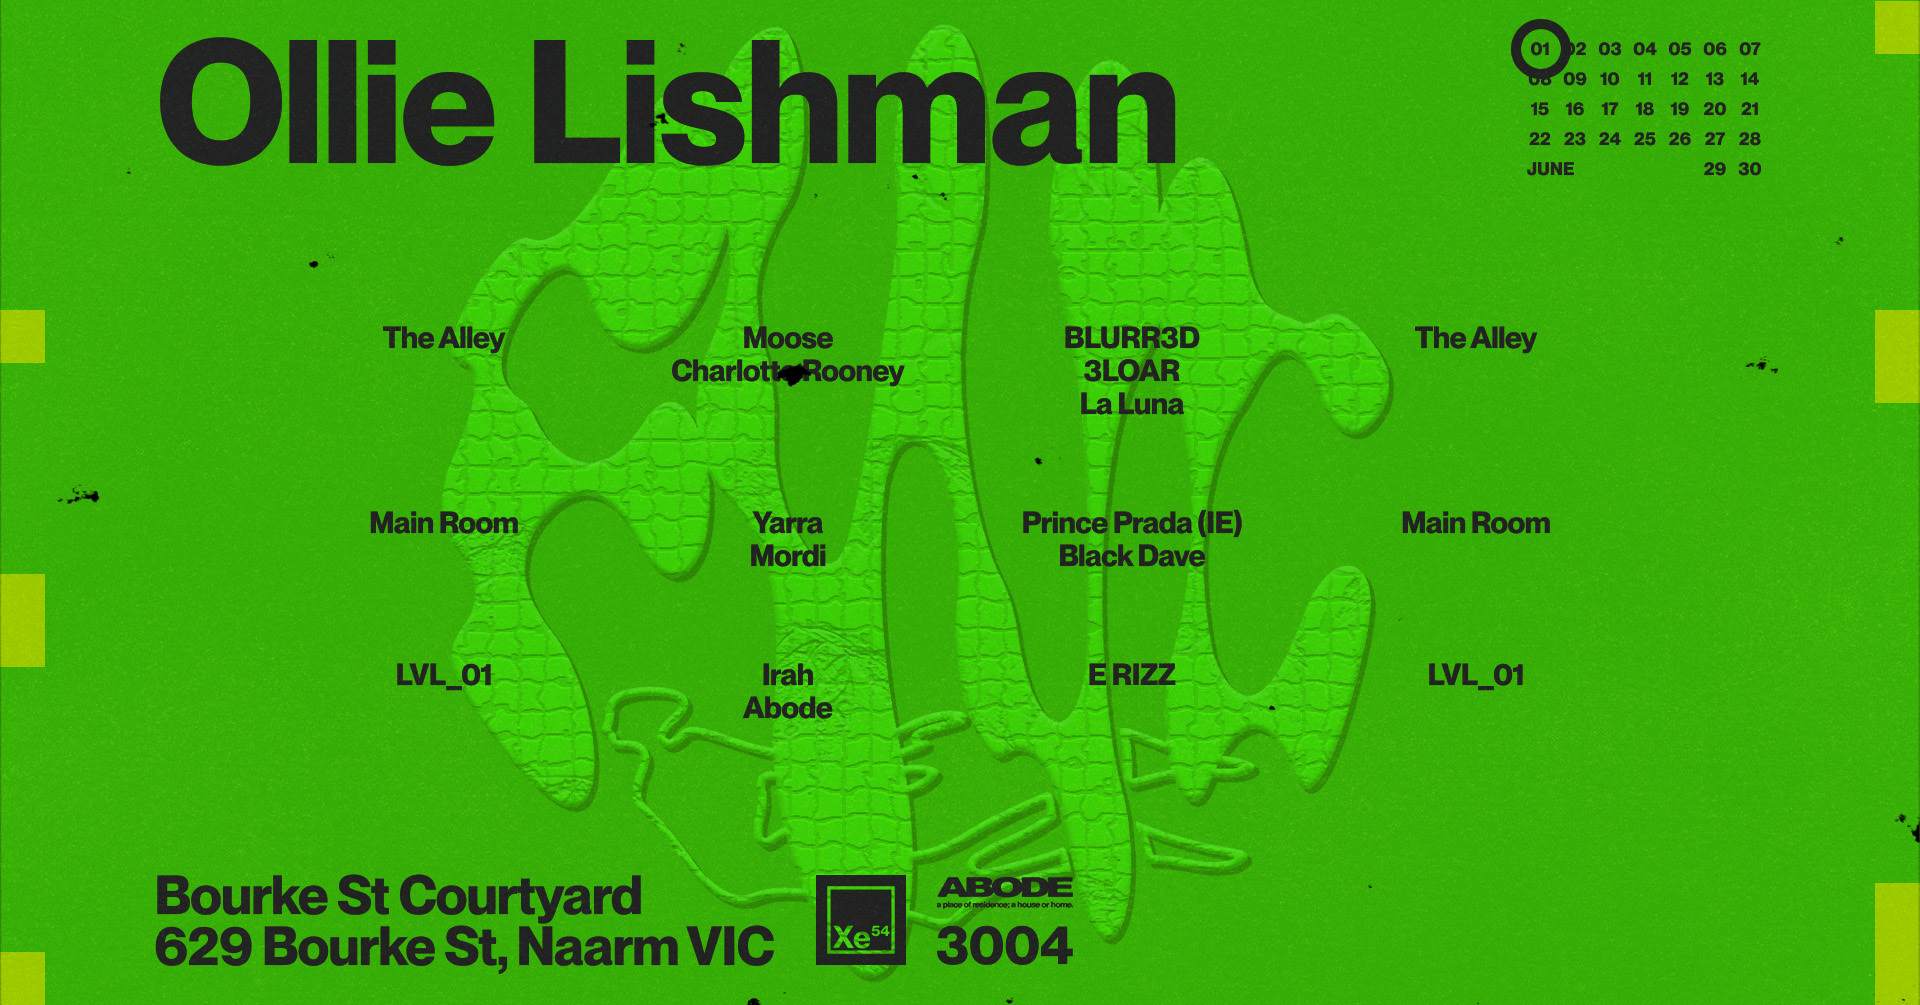 Xe54 ▬ Ollie Lishman - フライヤー表